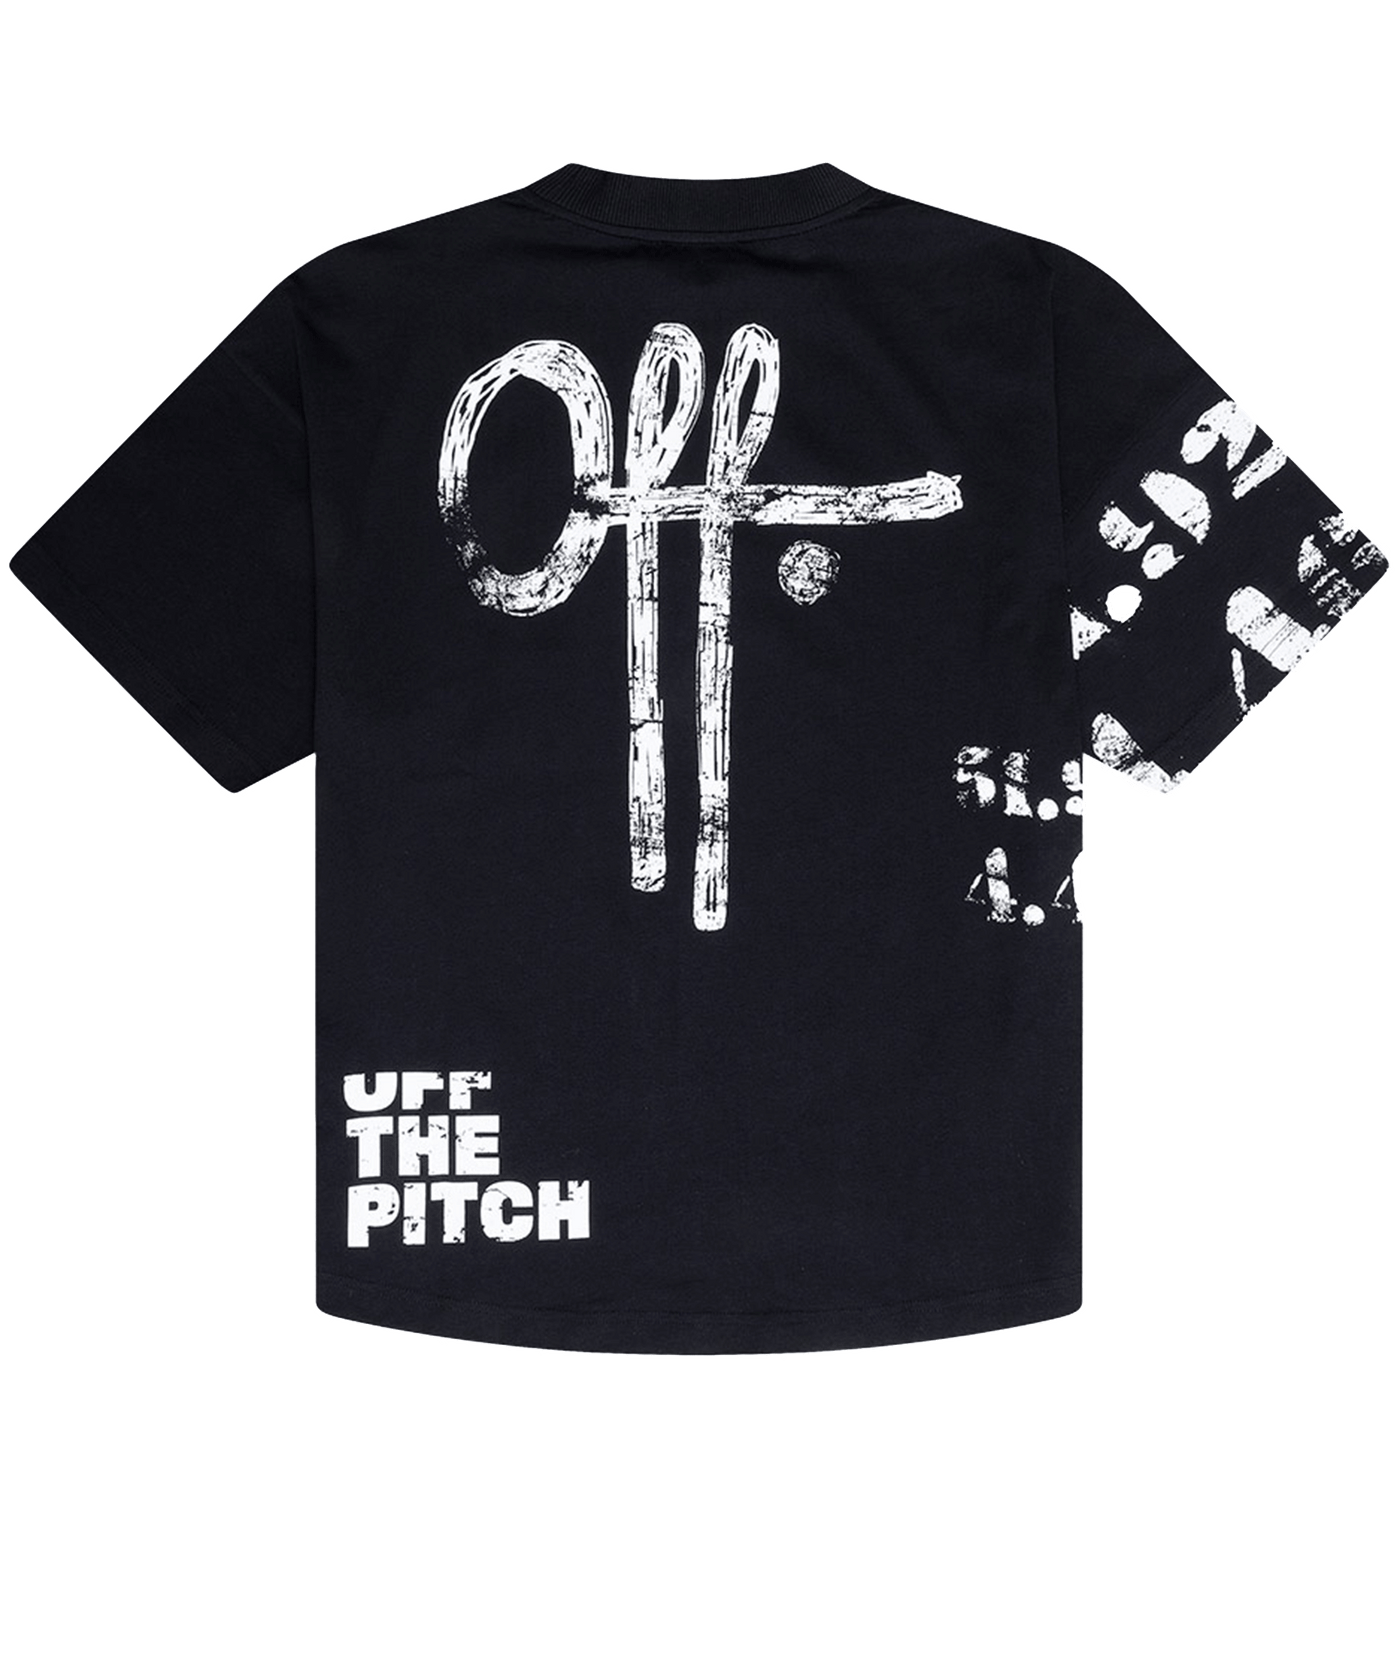 Off The Pitch - Otp233012 - Chalk T-shirt - 998 Black